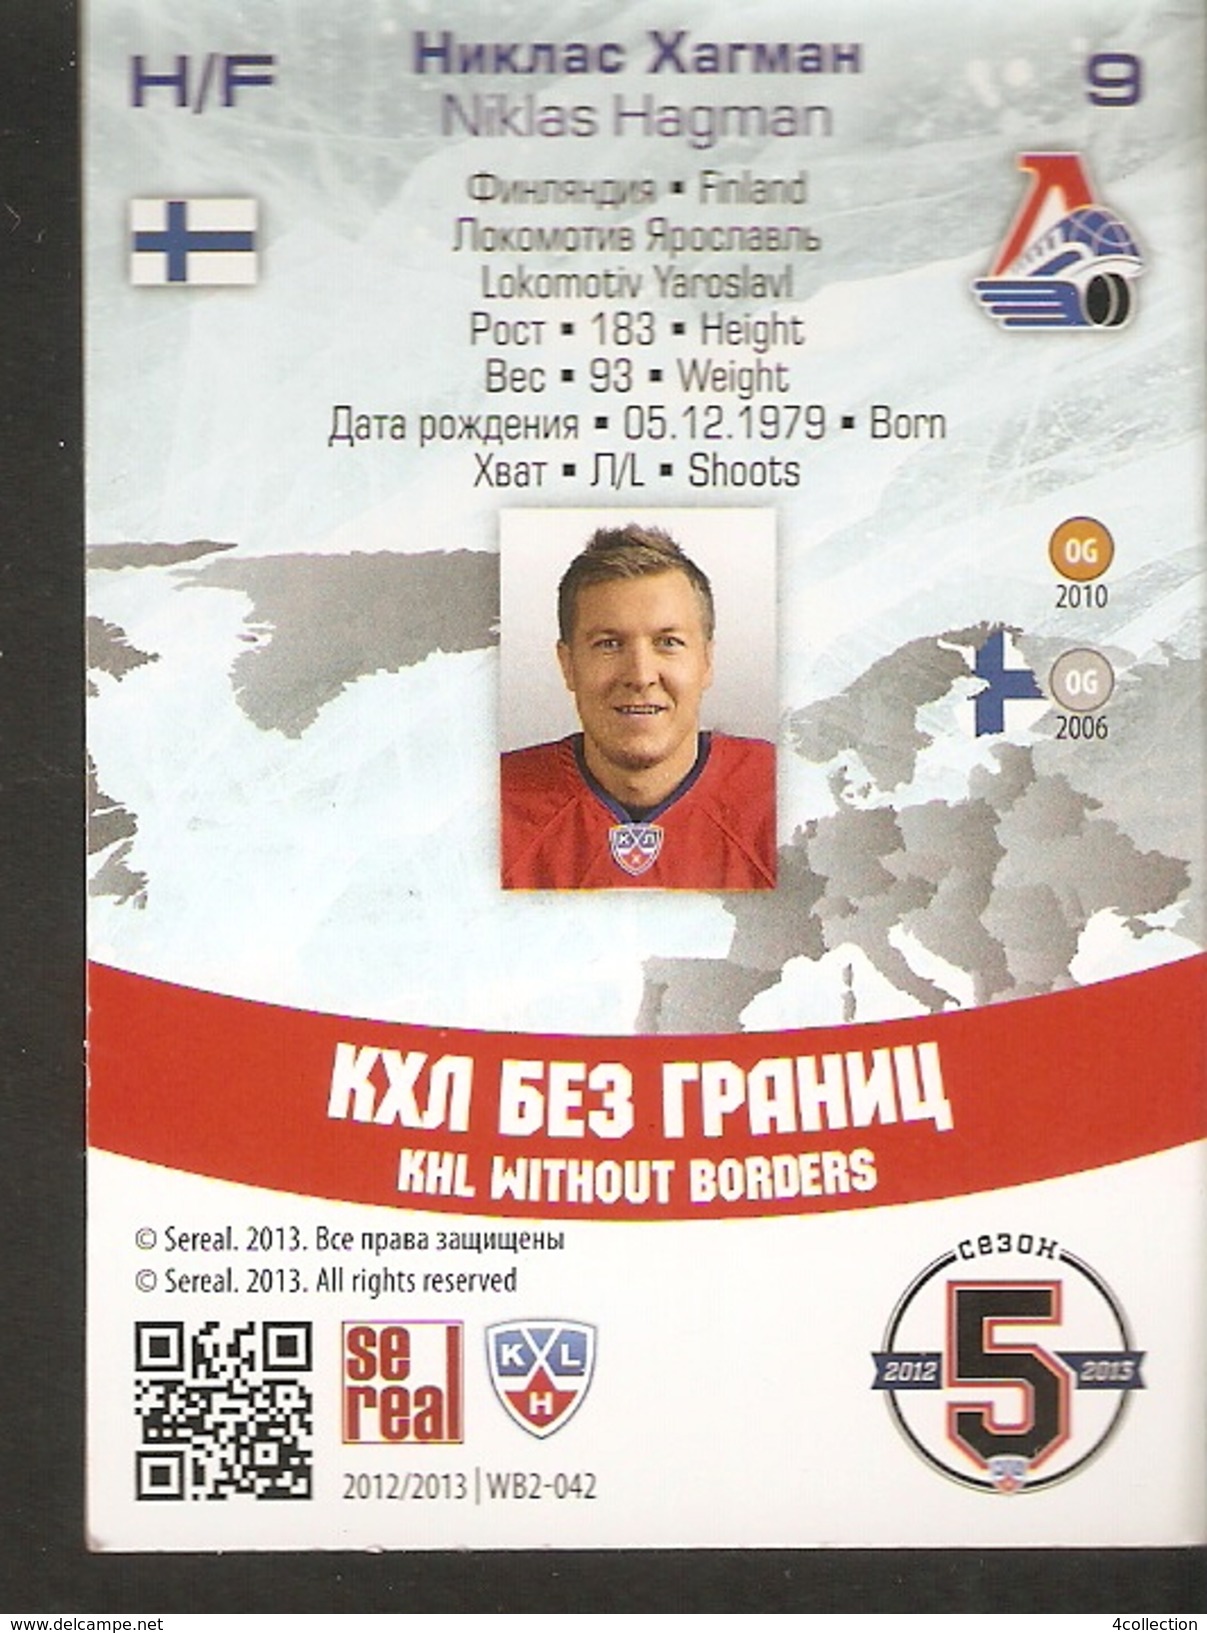 Hockey Sport Collectibles KHL Se Real Card NIKLAS HAGMAN H/F #9 Finland LOKOMOTIV Yaroslavl 5th Season 2012-2013 - 2000-Aujourd'hui